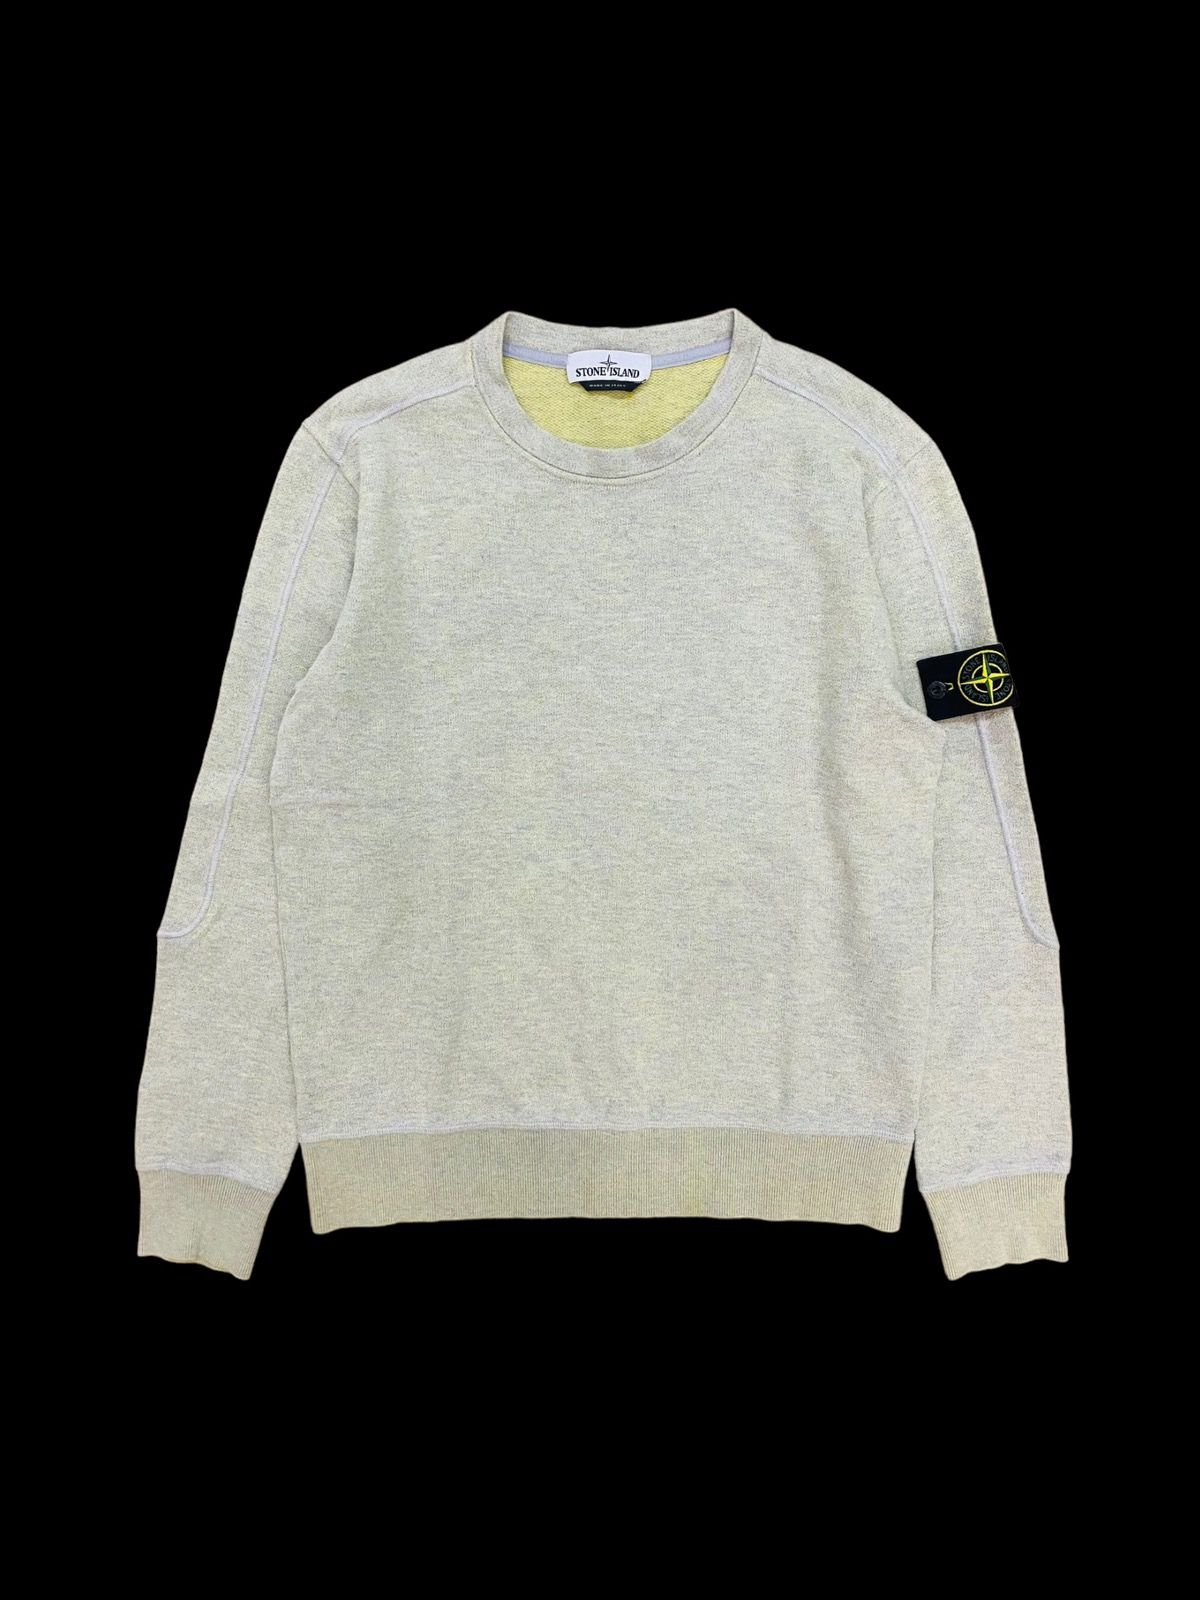 Stone Island Sweatshirt Pullover Vintage Authentic Men’s L - 1